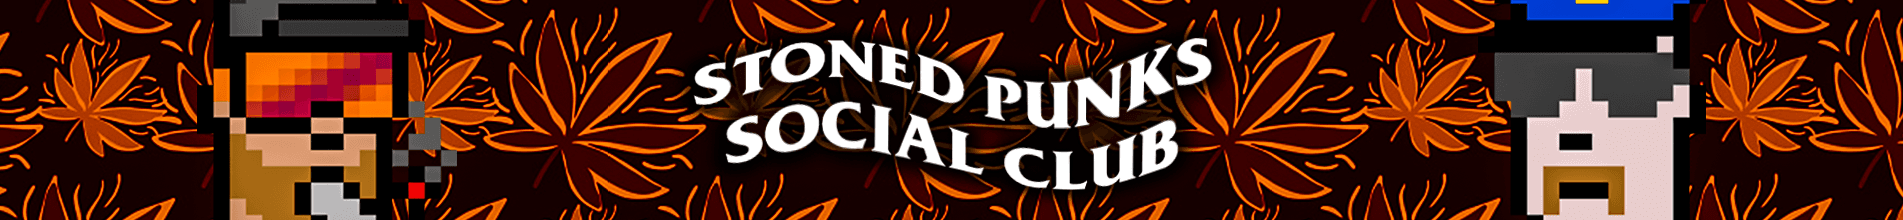 StonedPunksSocialClub Banner